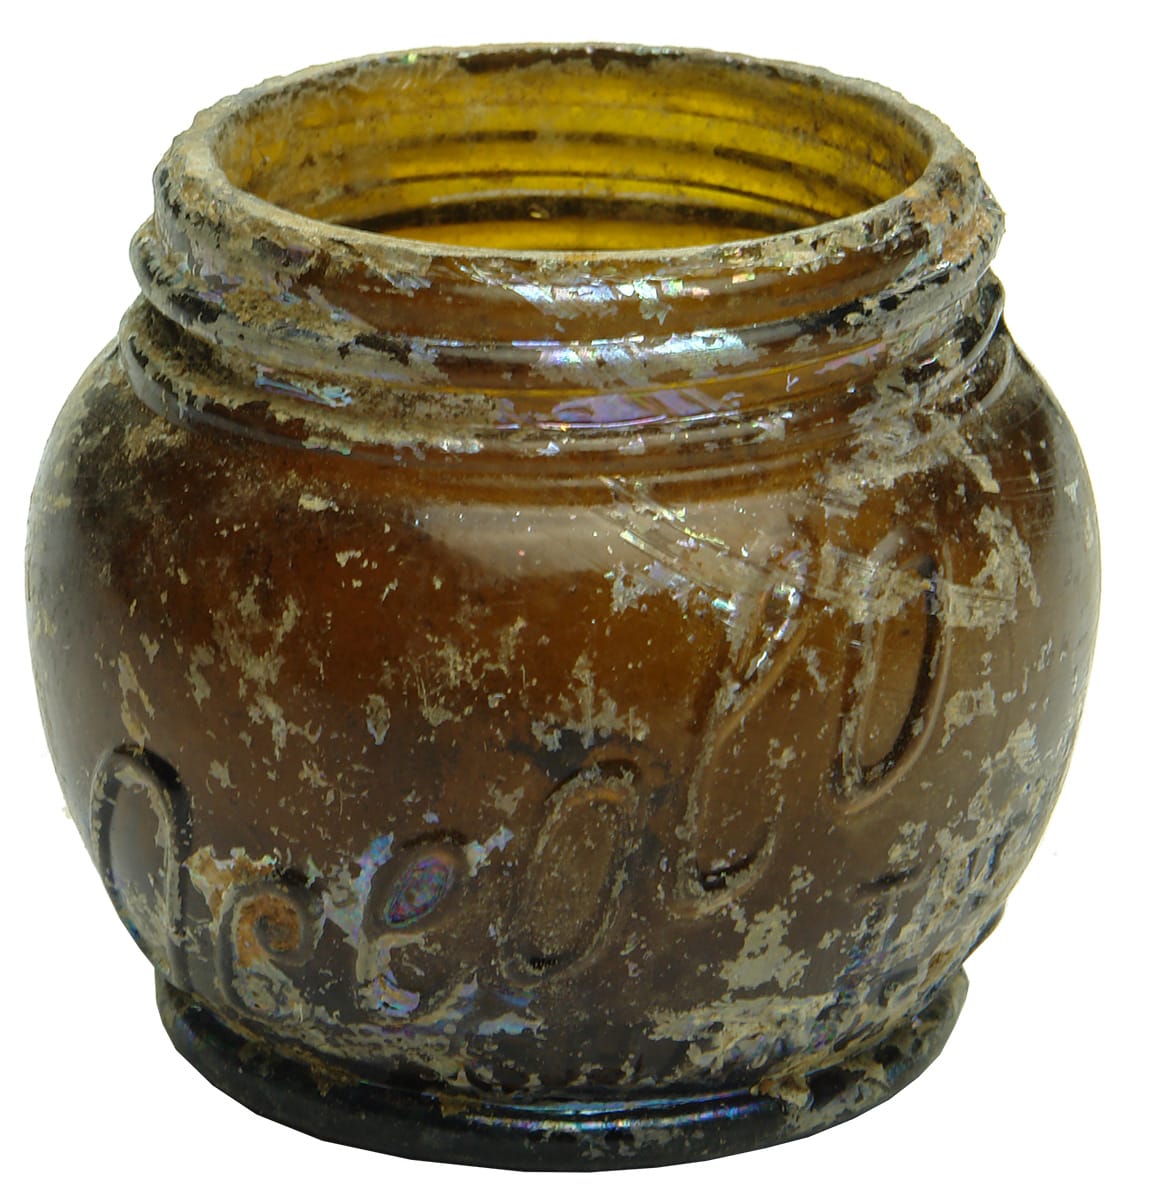 Oceolo Sunset Drug Sydney Glass Jar